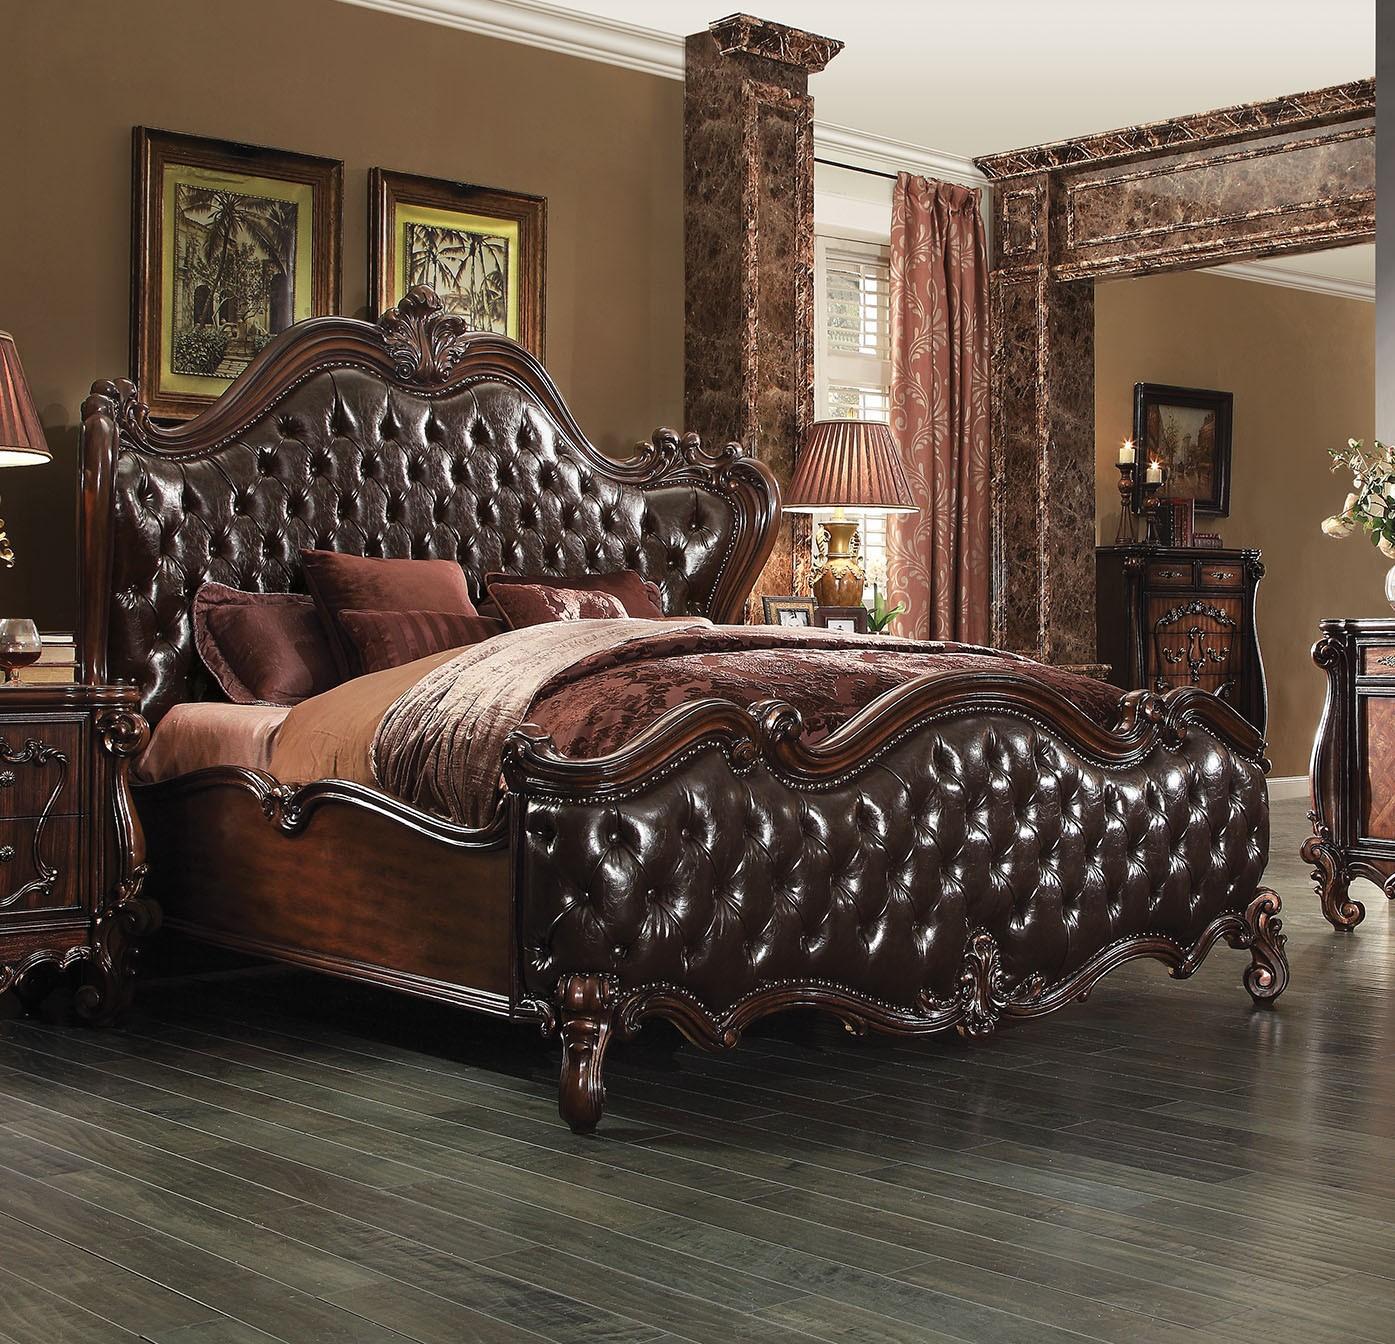 Classic, Traditional Panel Bed Versailles-21117EK Versailles-21117EK in Cherry Finish, Brown Polyurethane